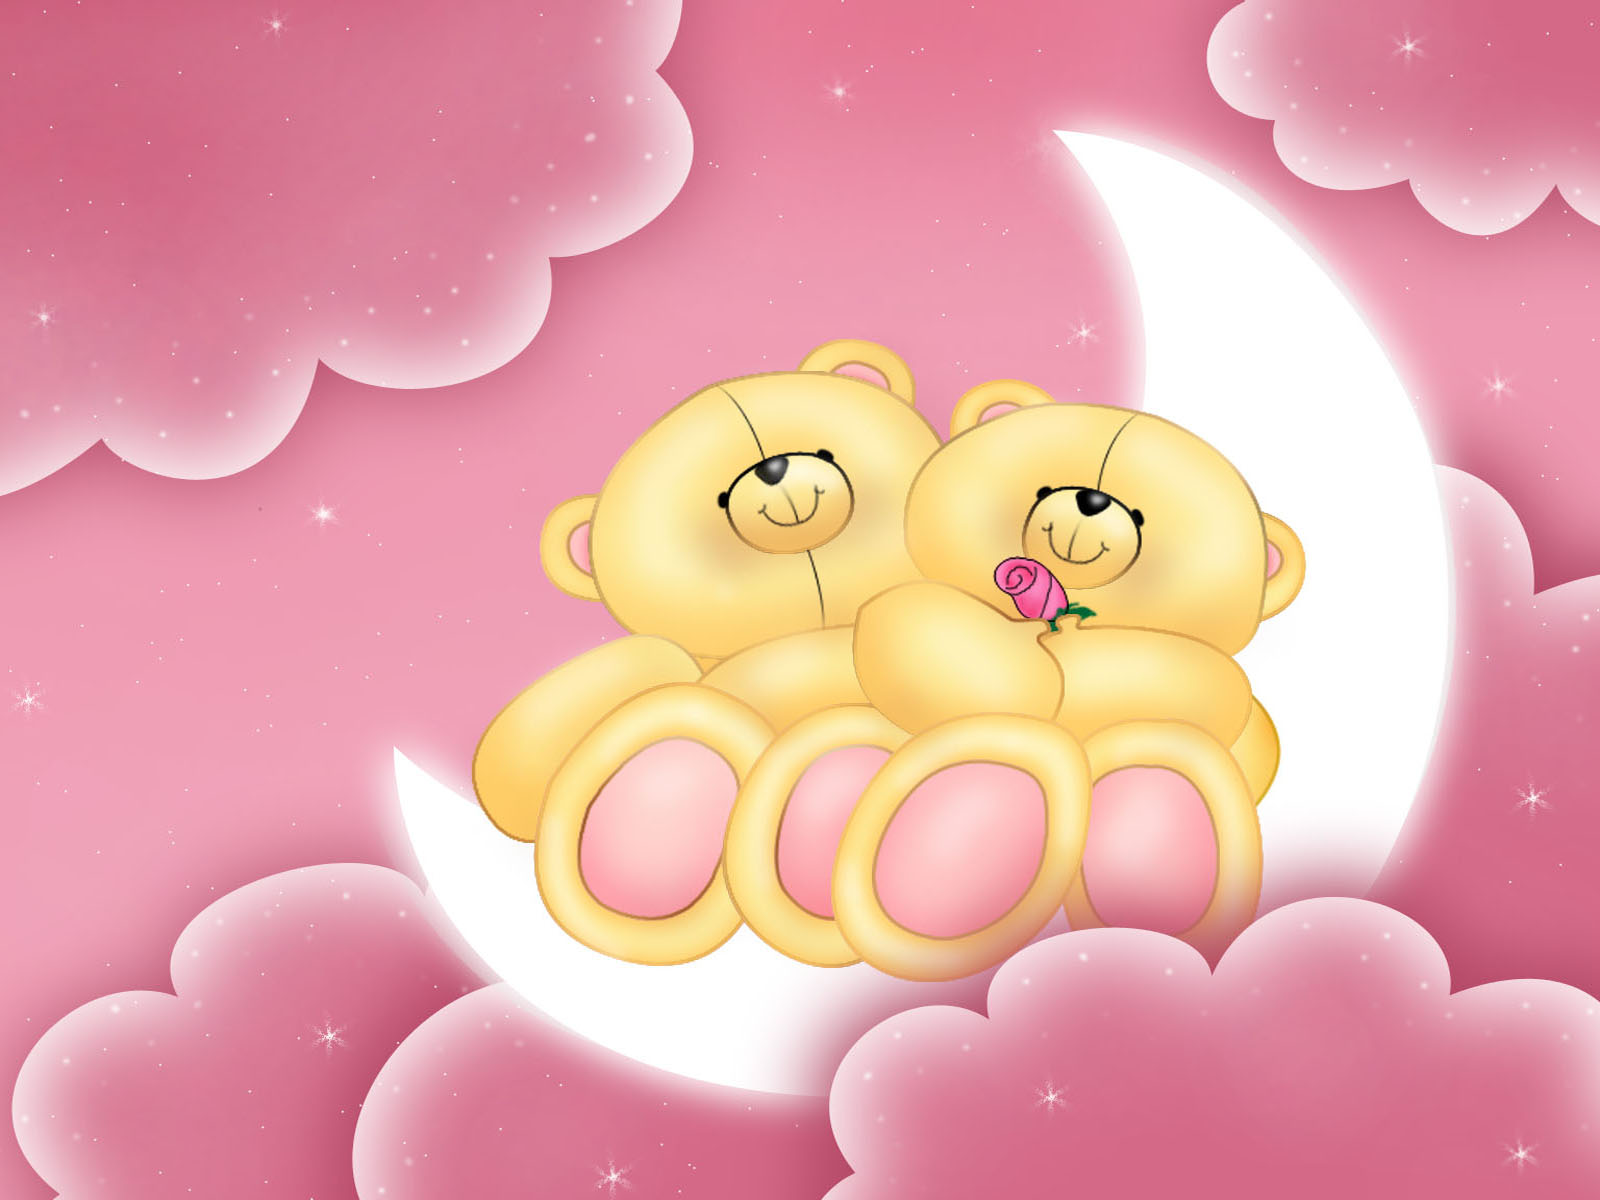 http://1.bp.blogspot.com/-532Cz4KTolA/UF2rCboY0qI/AAAAAAAAAIk/D5vE70u7st8/s1600/teddybears-moon-pink-sky-wallpaper.jpg